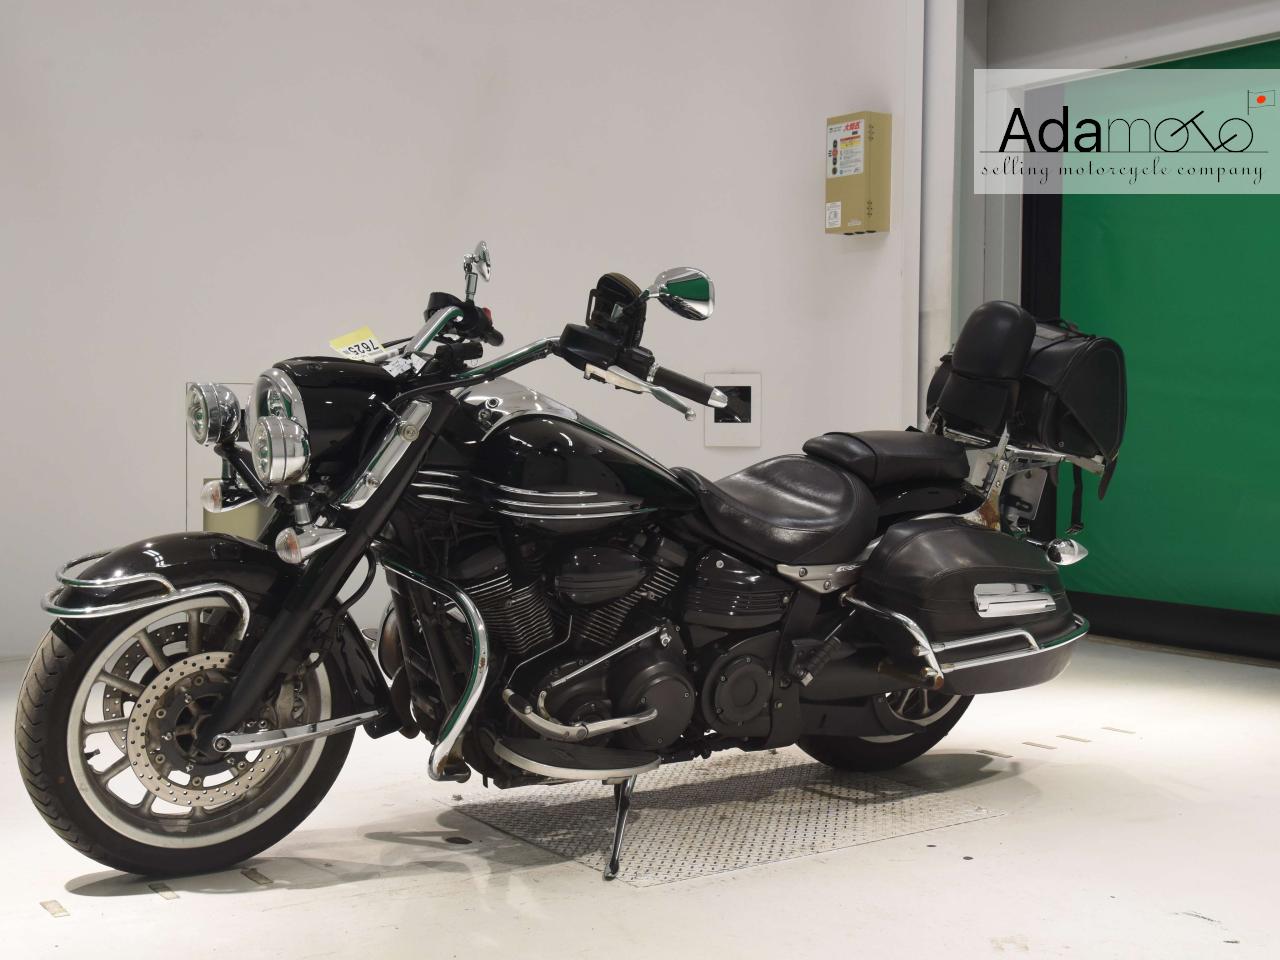 Yamaha XV1900 MIDNIGHT STAR - Adamoto - Motorcycles from Japan